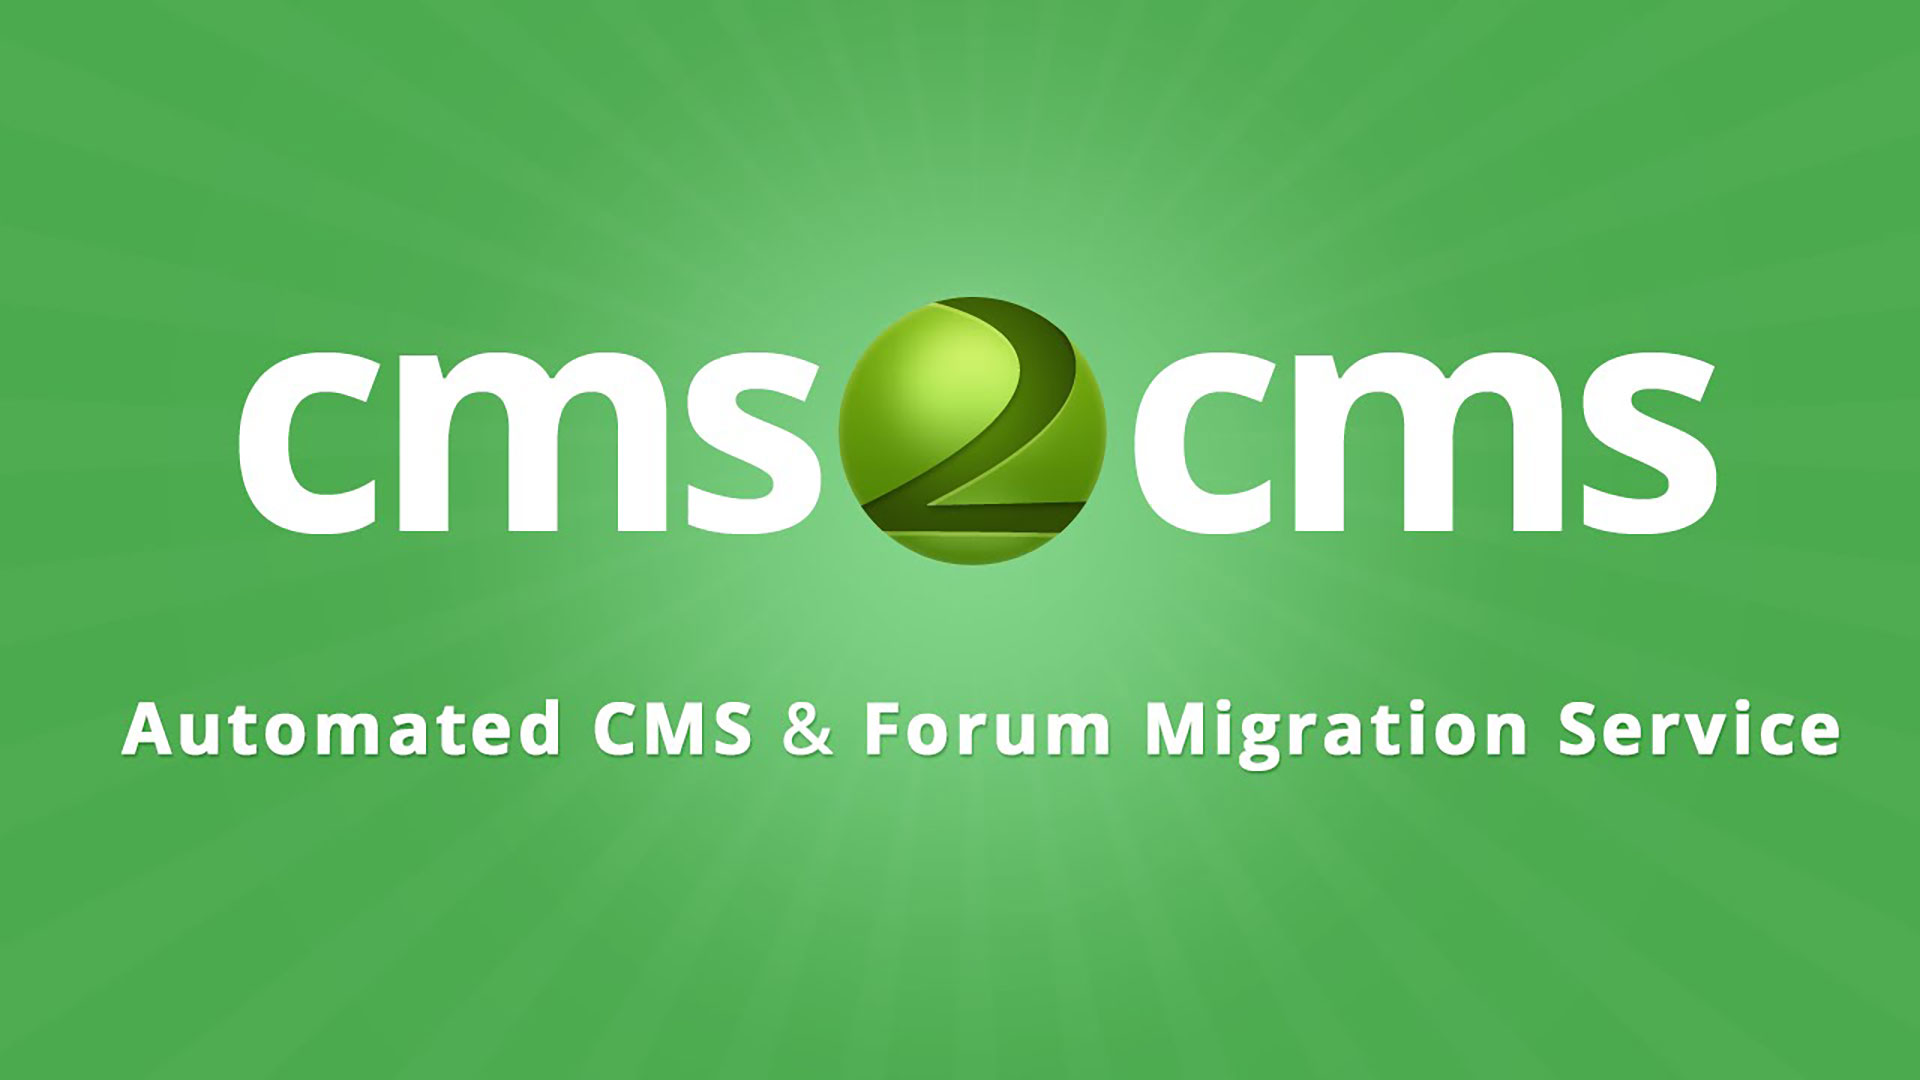 Cms2cms Website Migration Servicenbsp› Entrepreneur Decision Maker Connector Podcaster Educator